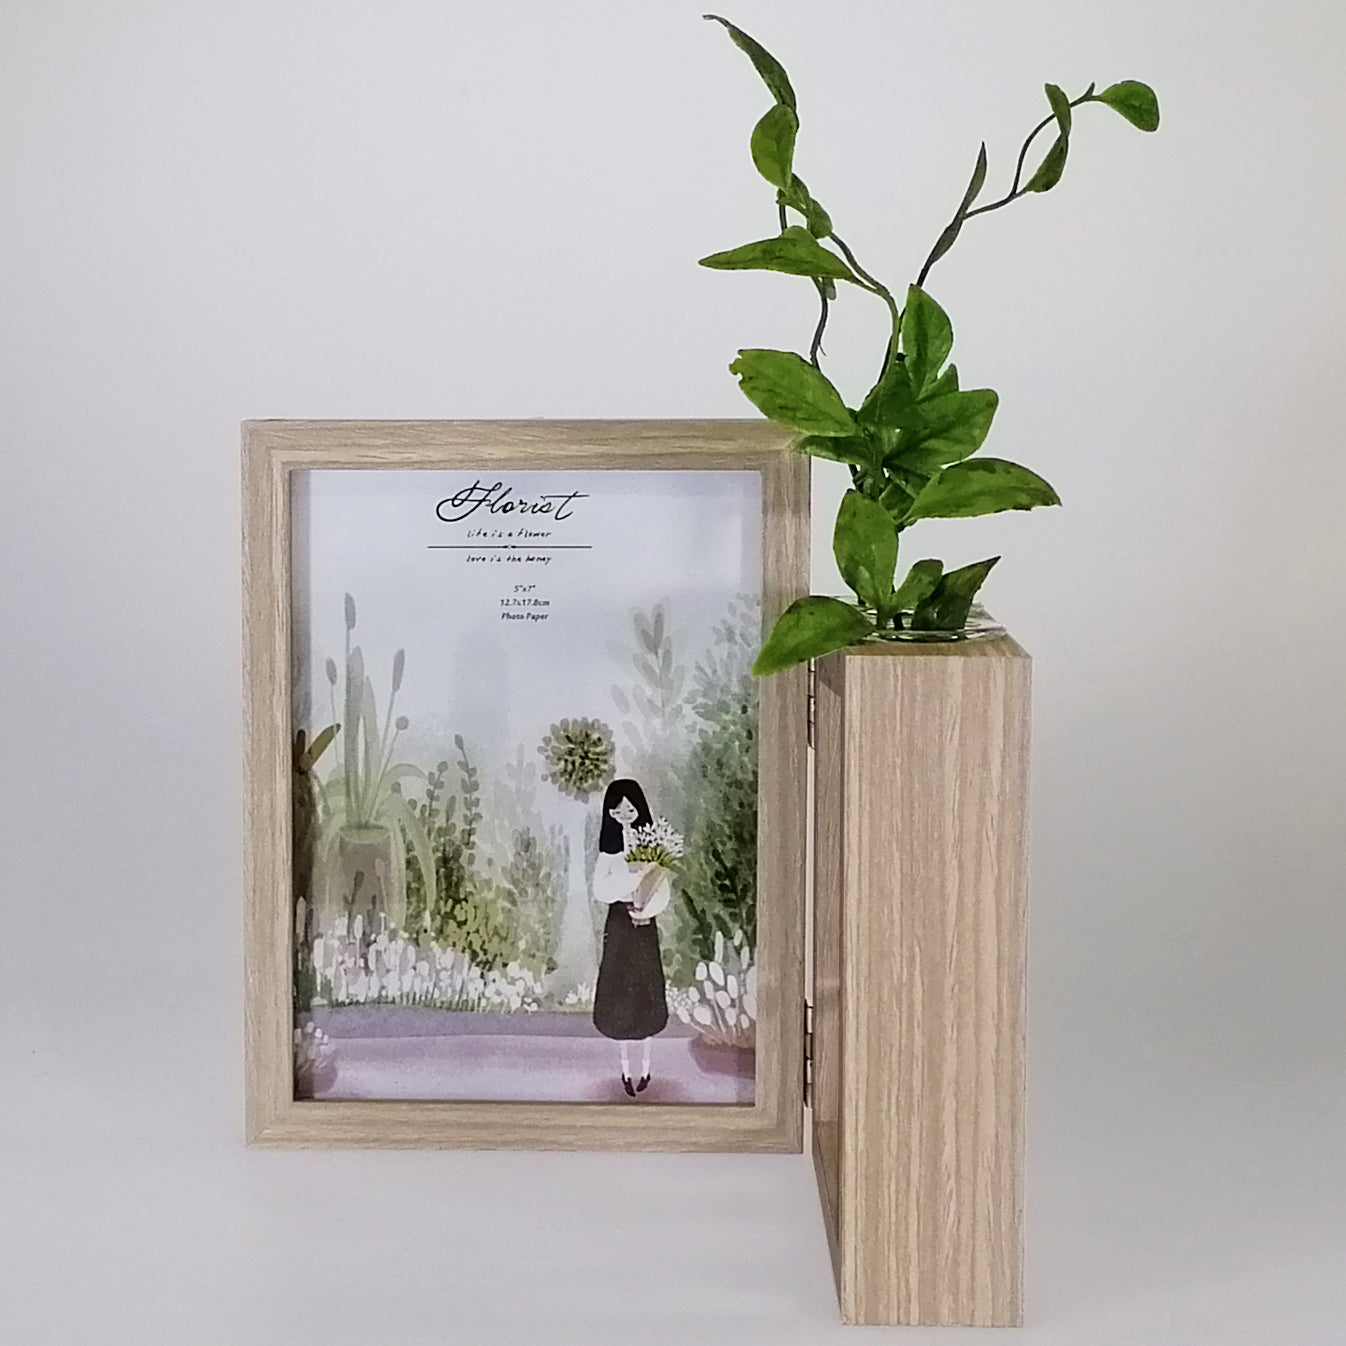 Grey Hinged Photo Frame with Tube Vases - 5"x 7"